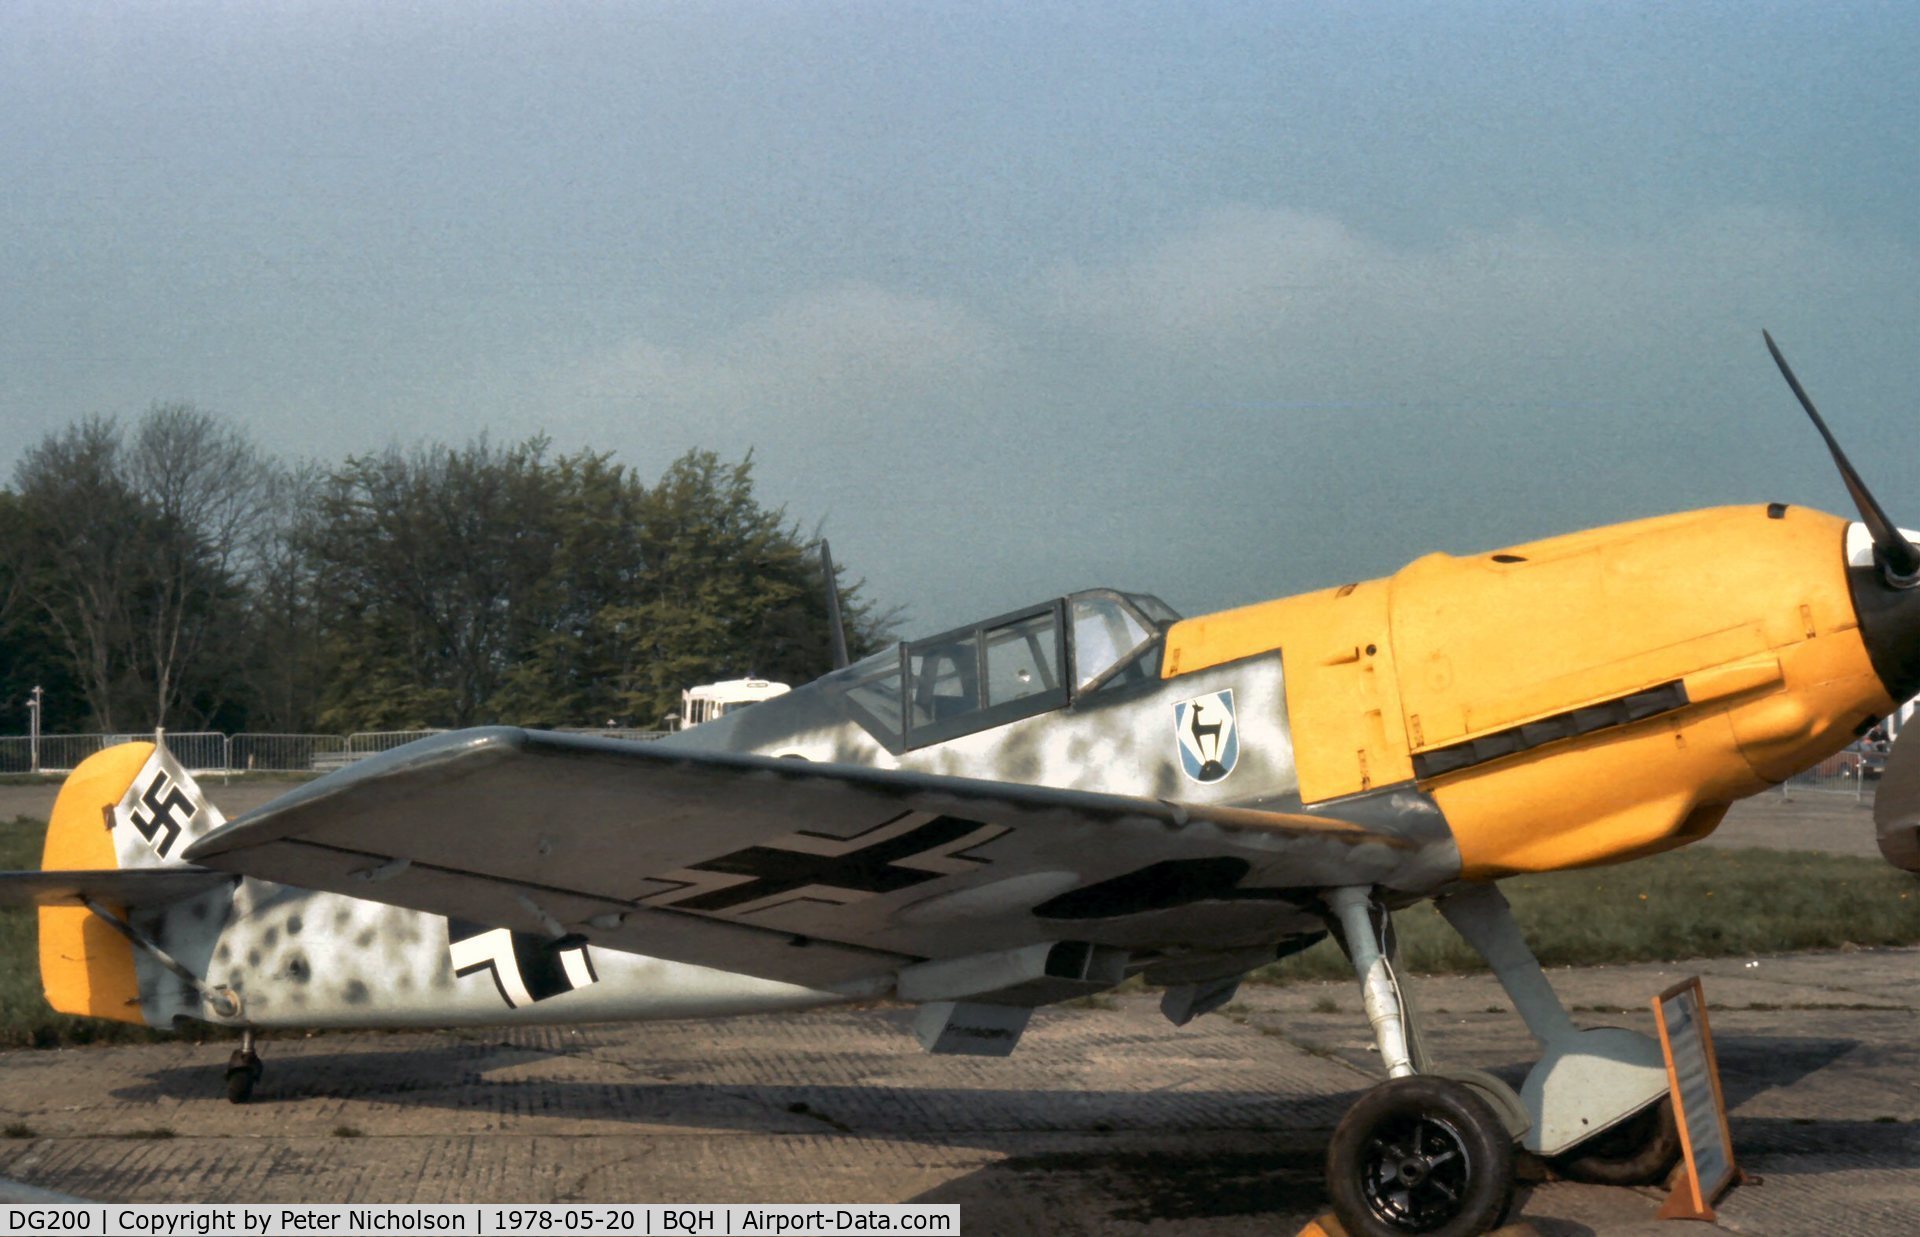 DG200, 1940 Messerschmitt Bf-109E-3/B C/N 4101, The RAF Museum's preserved Bf-109E, known as Black 12, was on display at the 1978 Biggin Hill Air Fair.